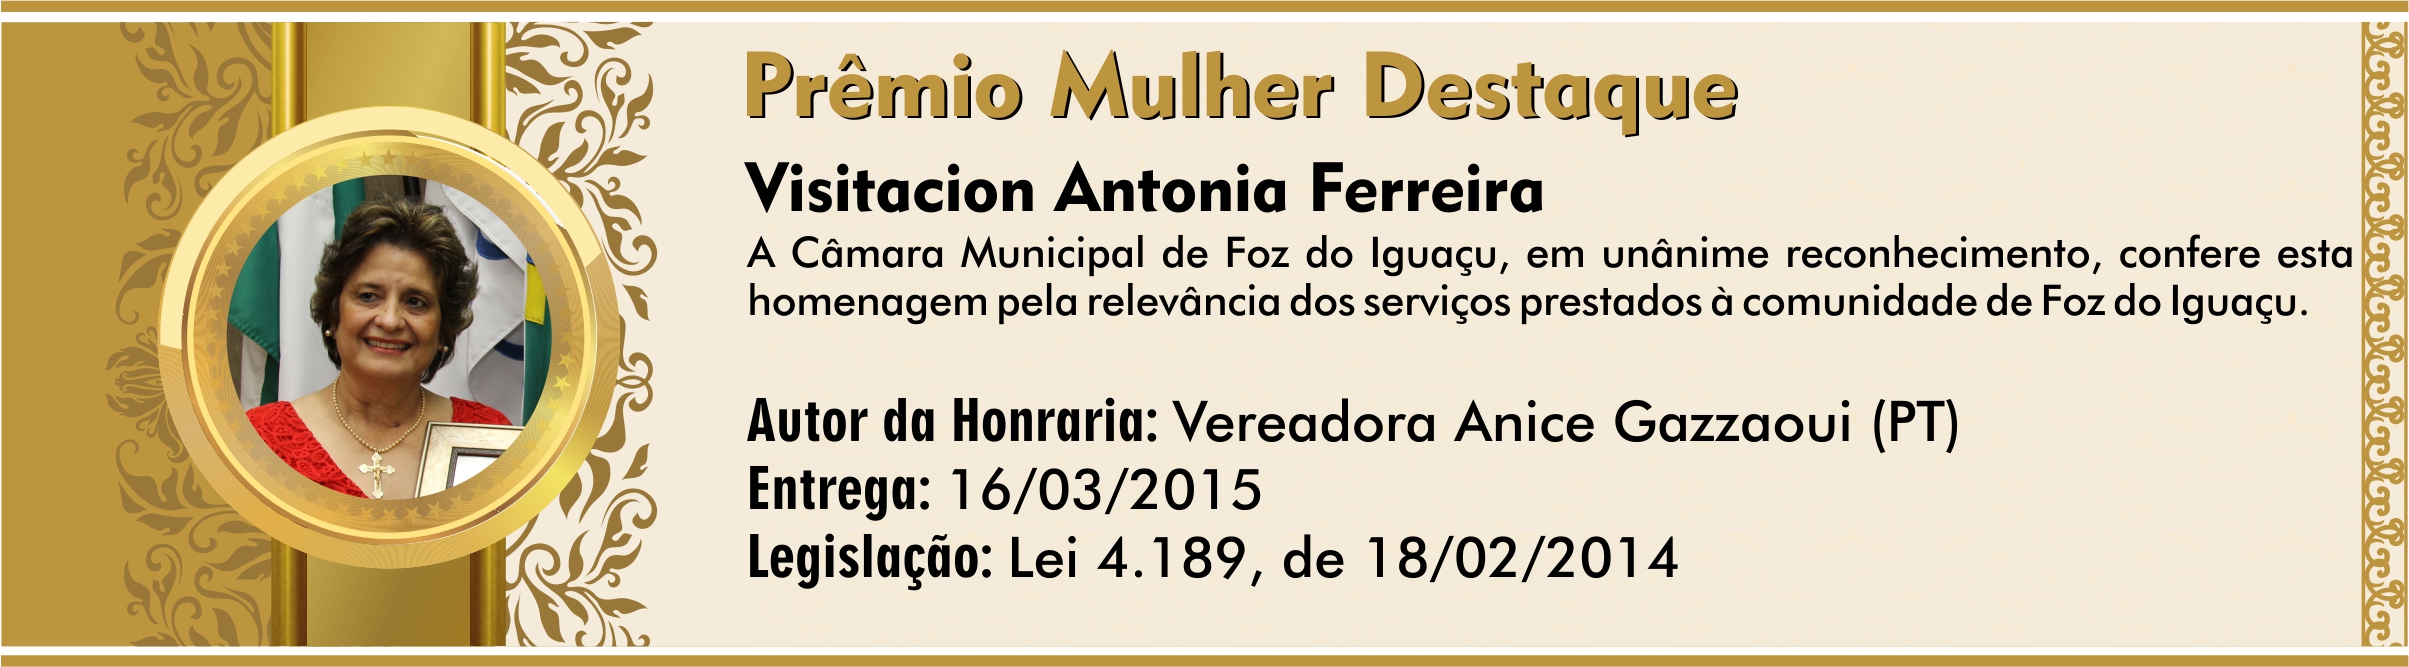 Visitacion Antonia Ferreira